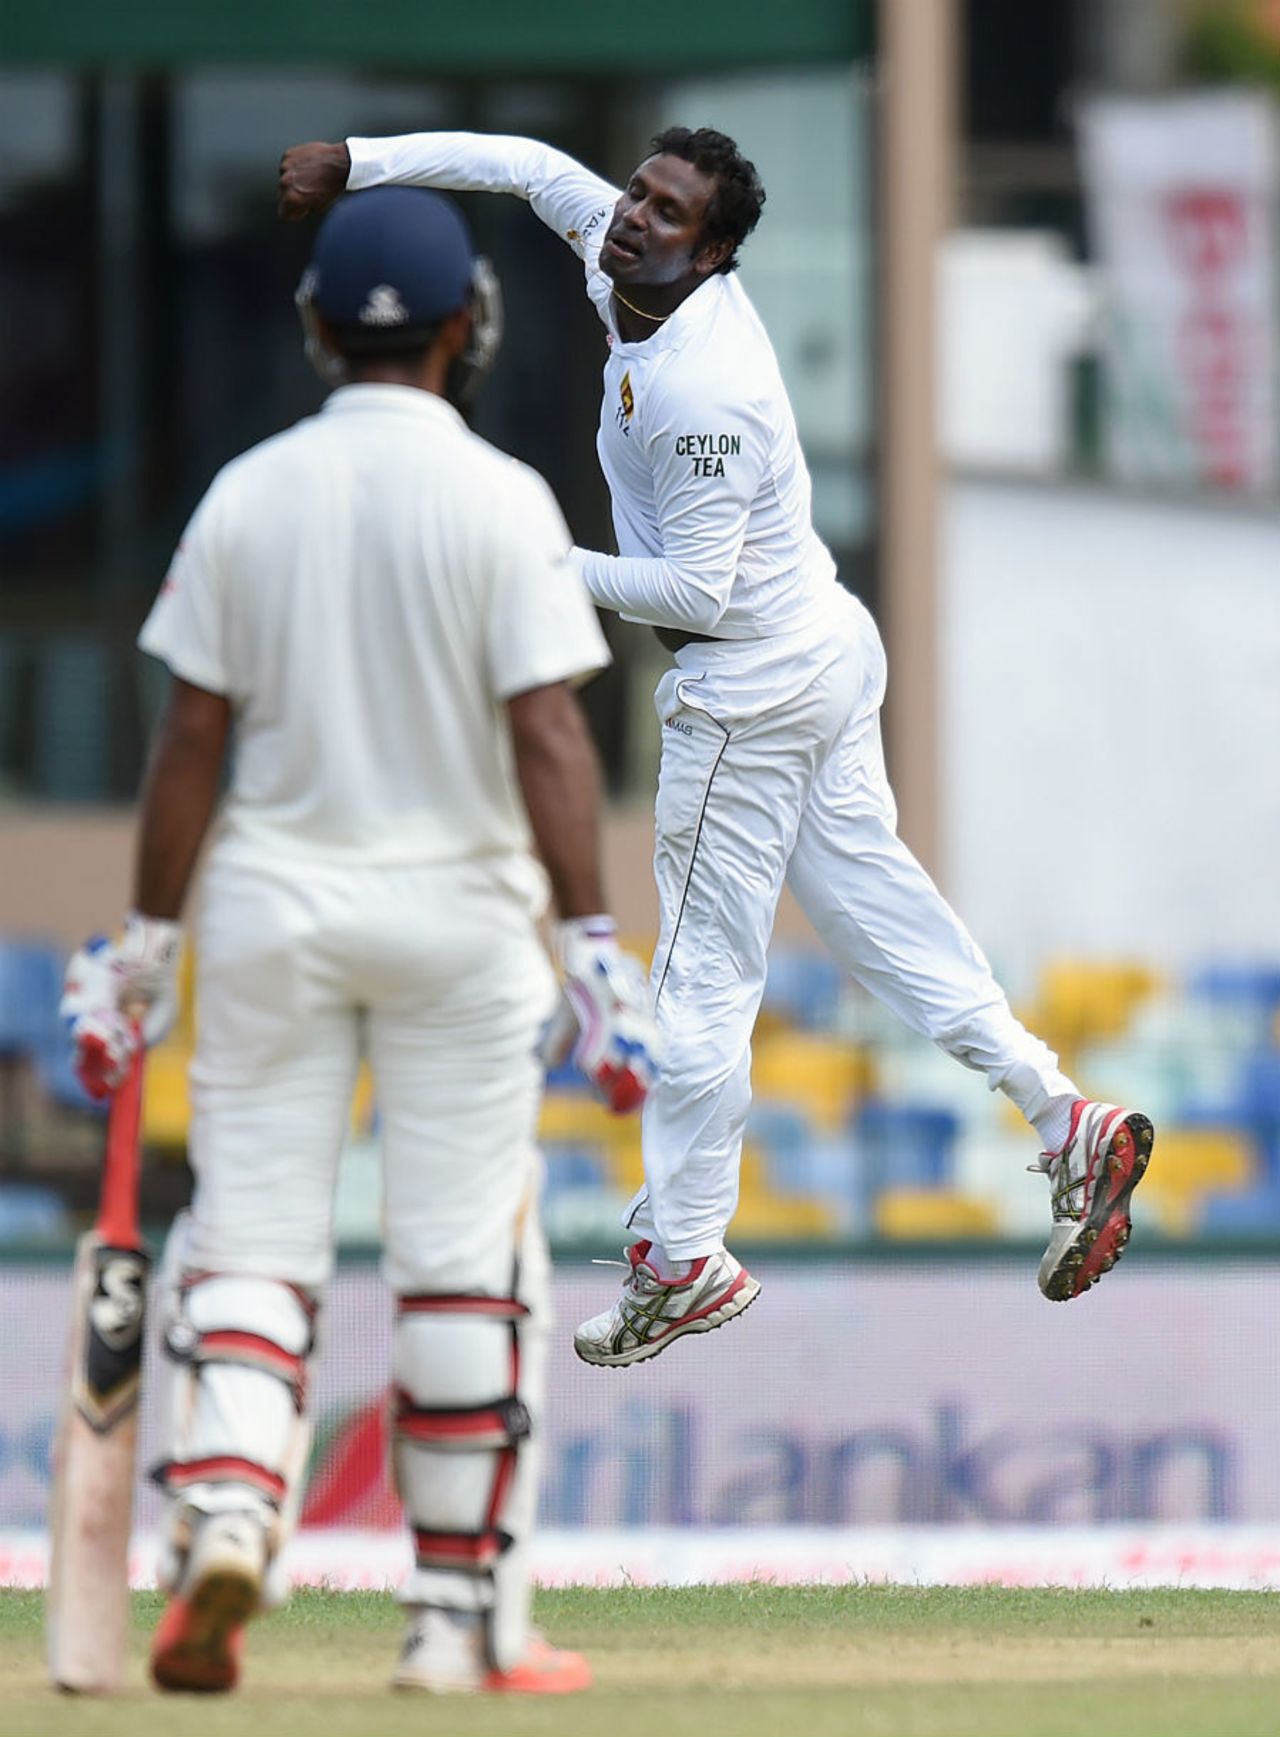 Angelo Mathews celebrates after dismissing Virat Kohli, Sri Lanka v India, 3rd Test, SSC, Colombo, 2nd day, August 29, 2015